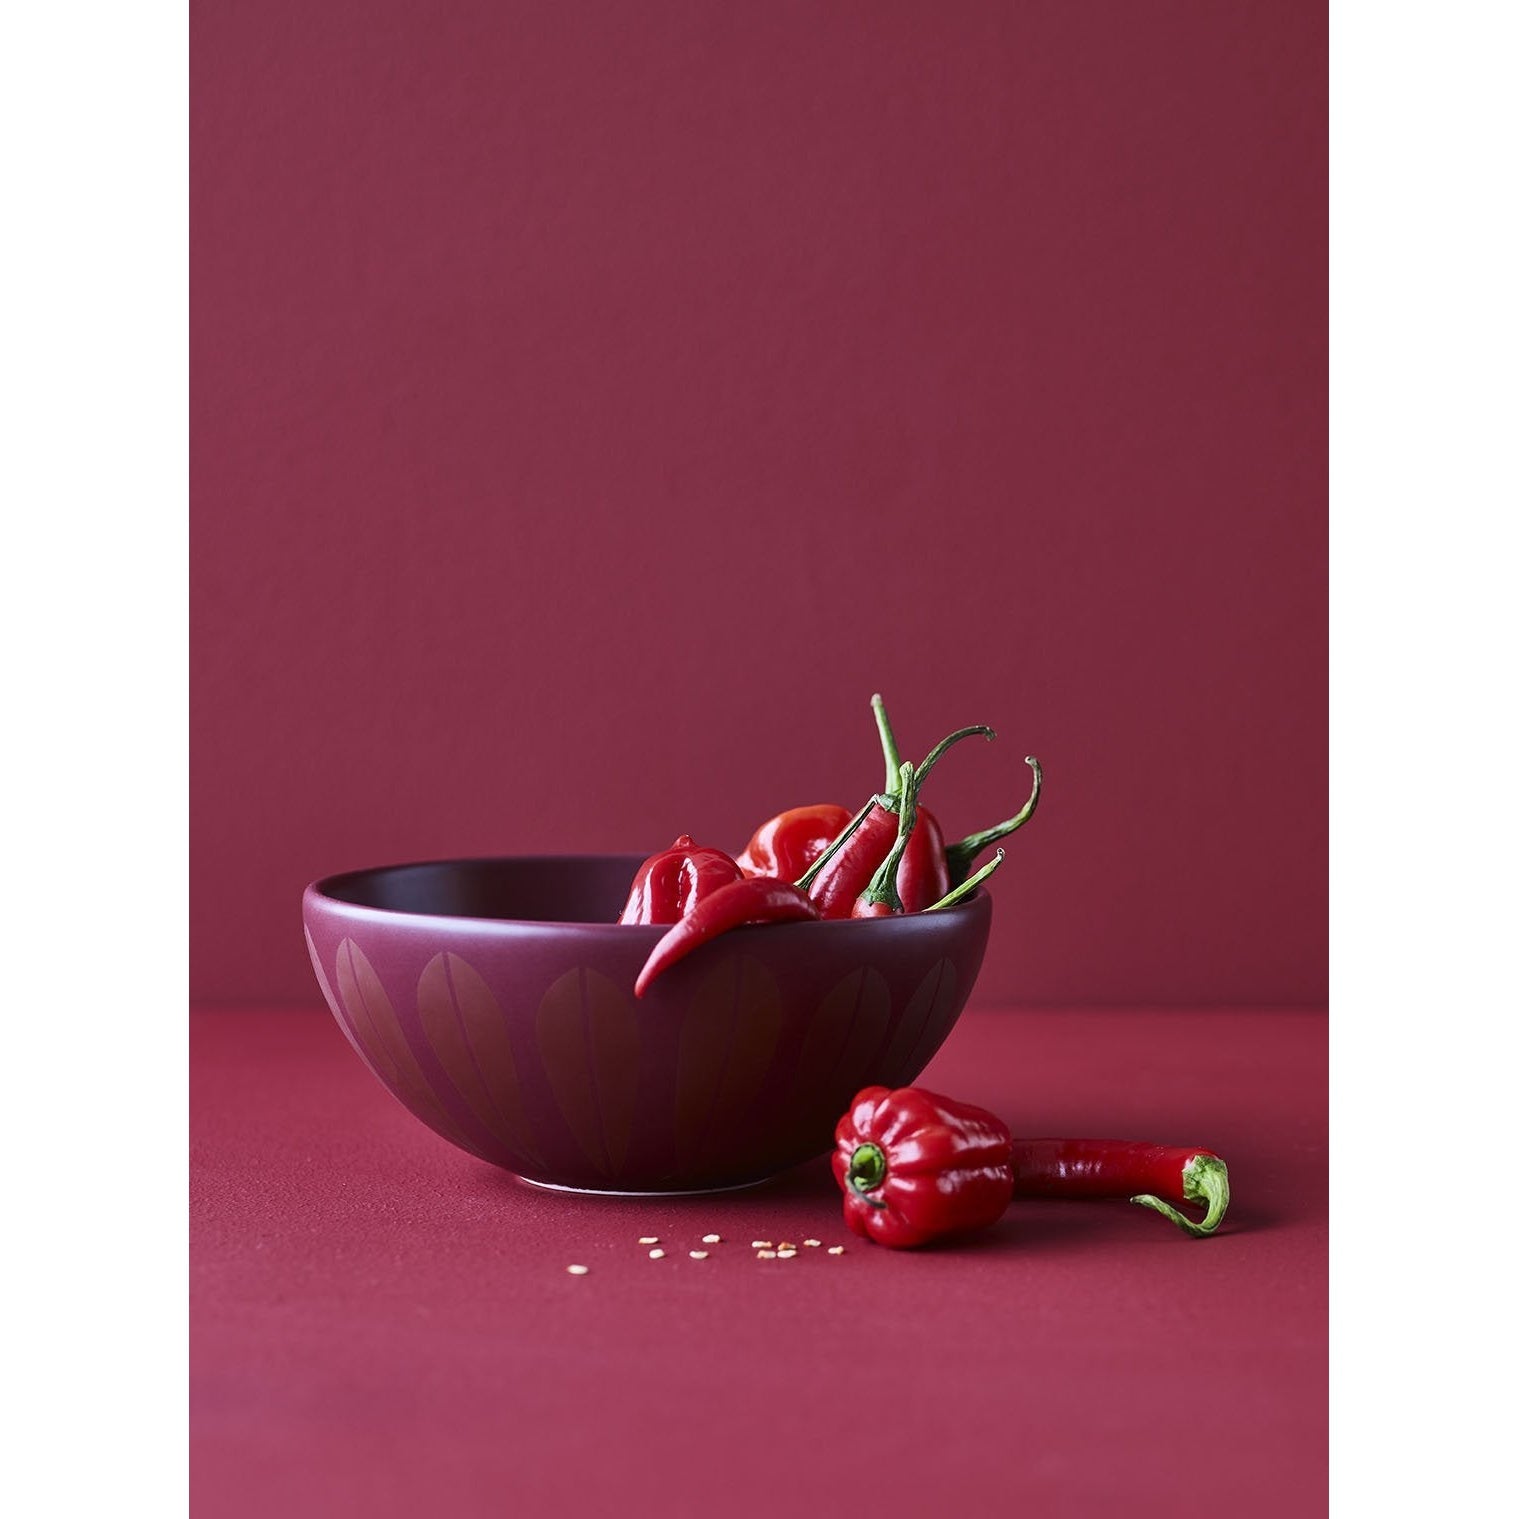 Lucie Kaas Arne Clausen Bowl rojo oscuro, 18 cm